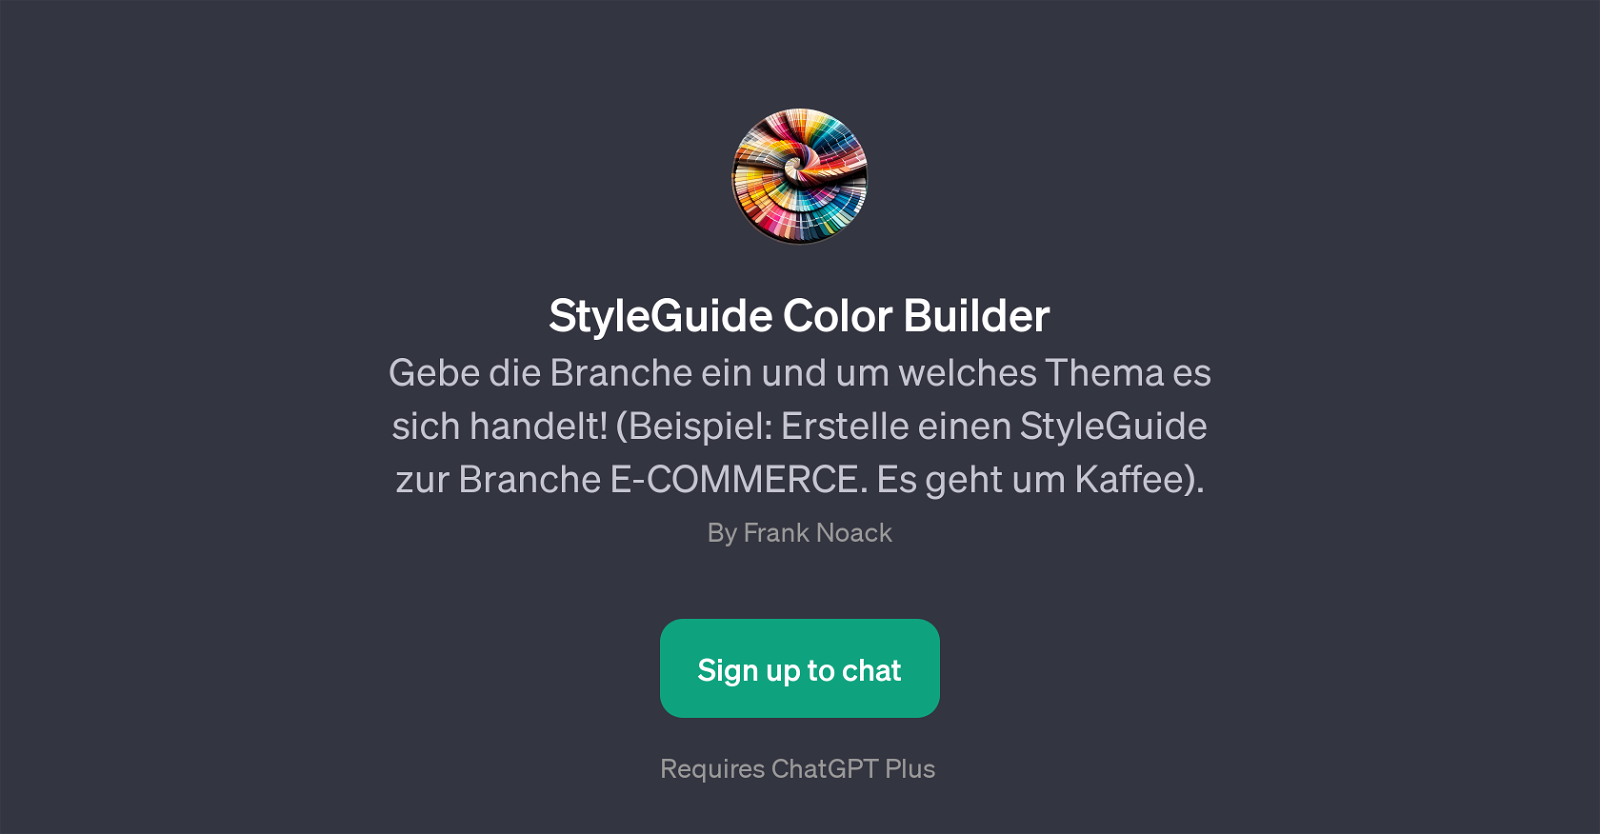 StyleGuide Color Builder website